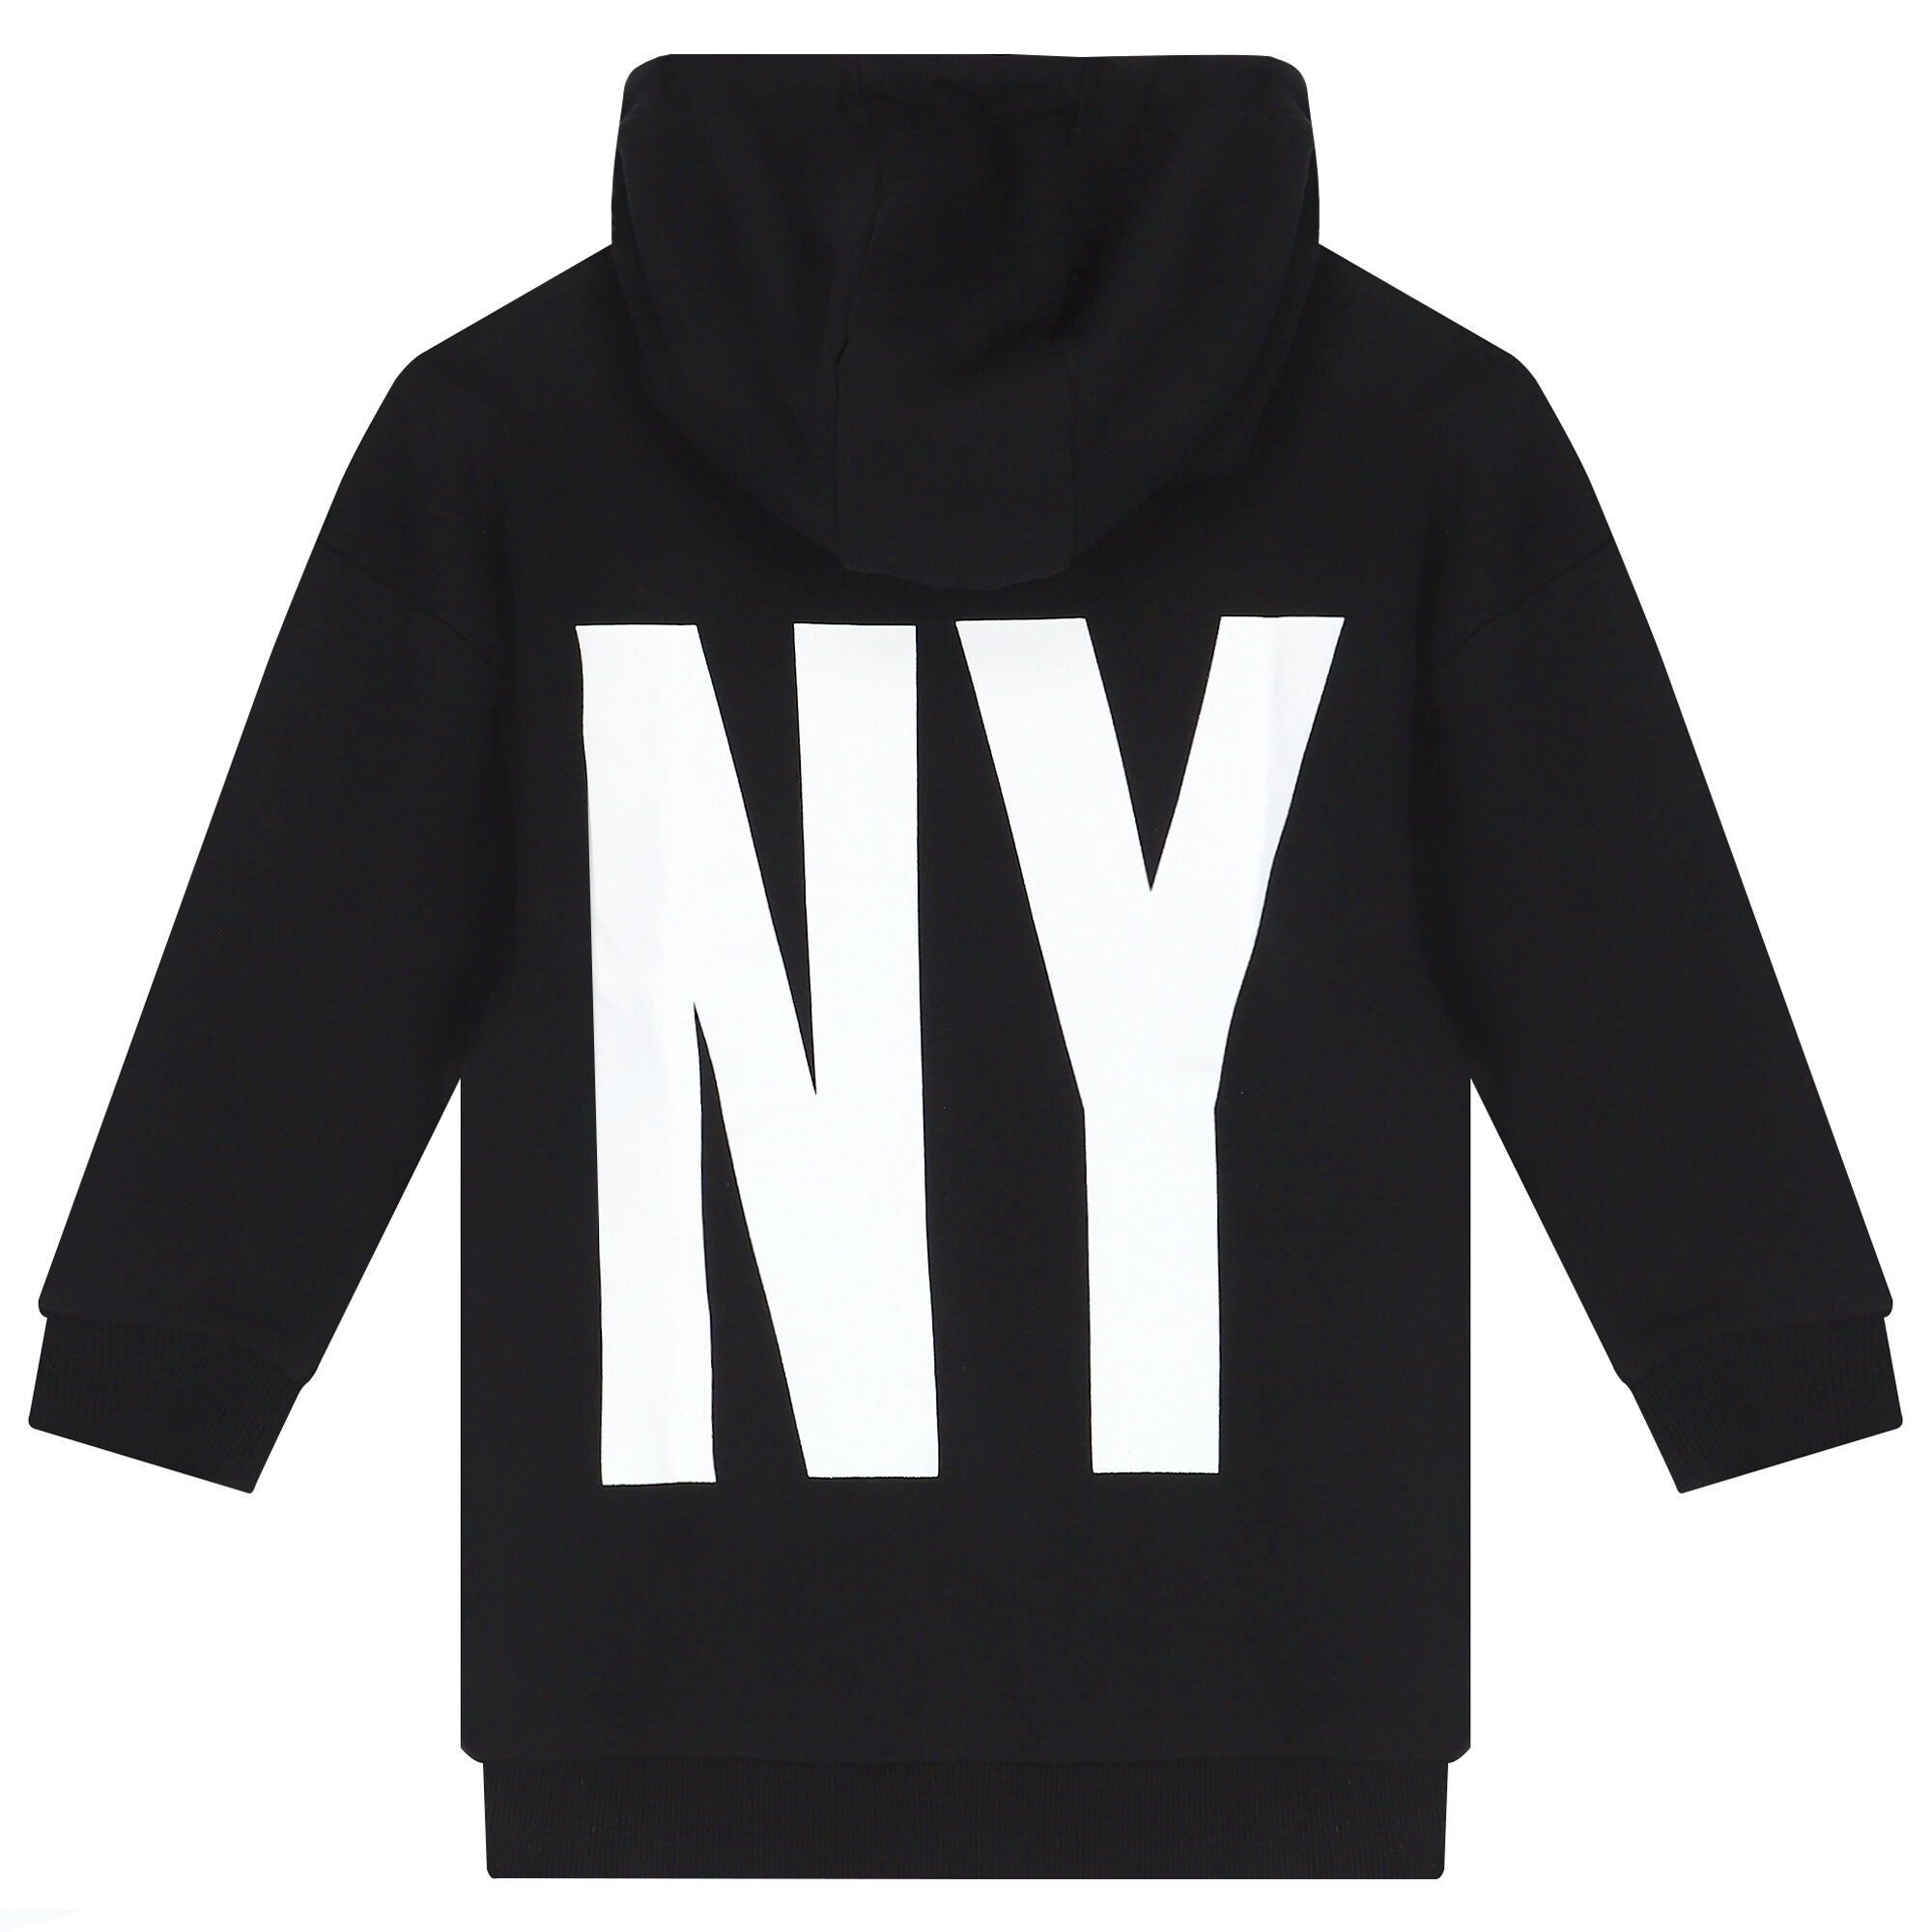 Dkny Kids logo-print hooded jumper dress - Black